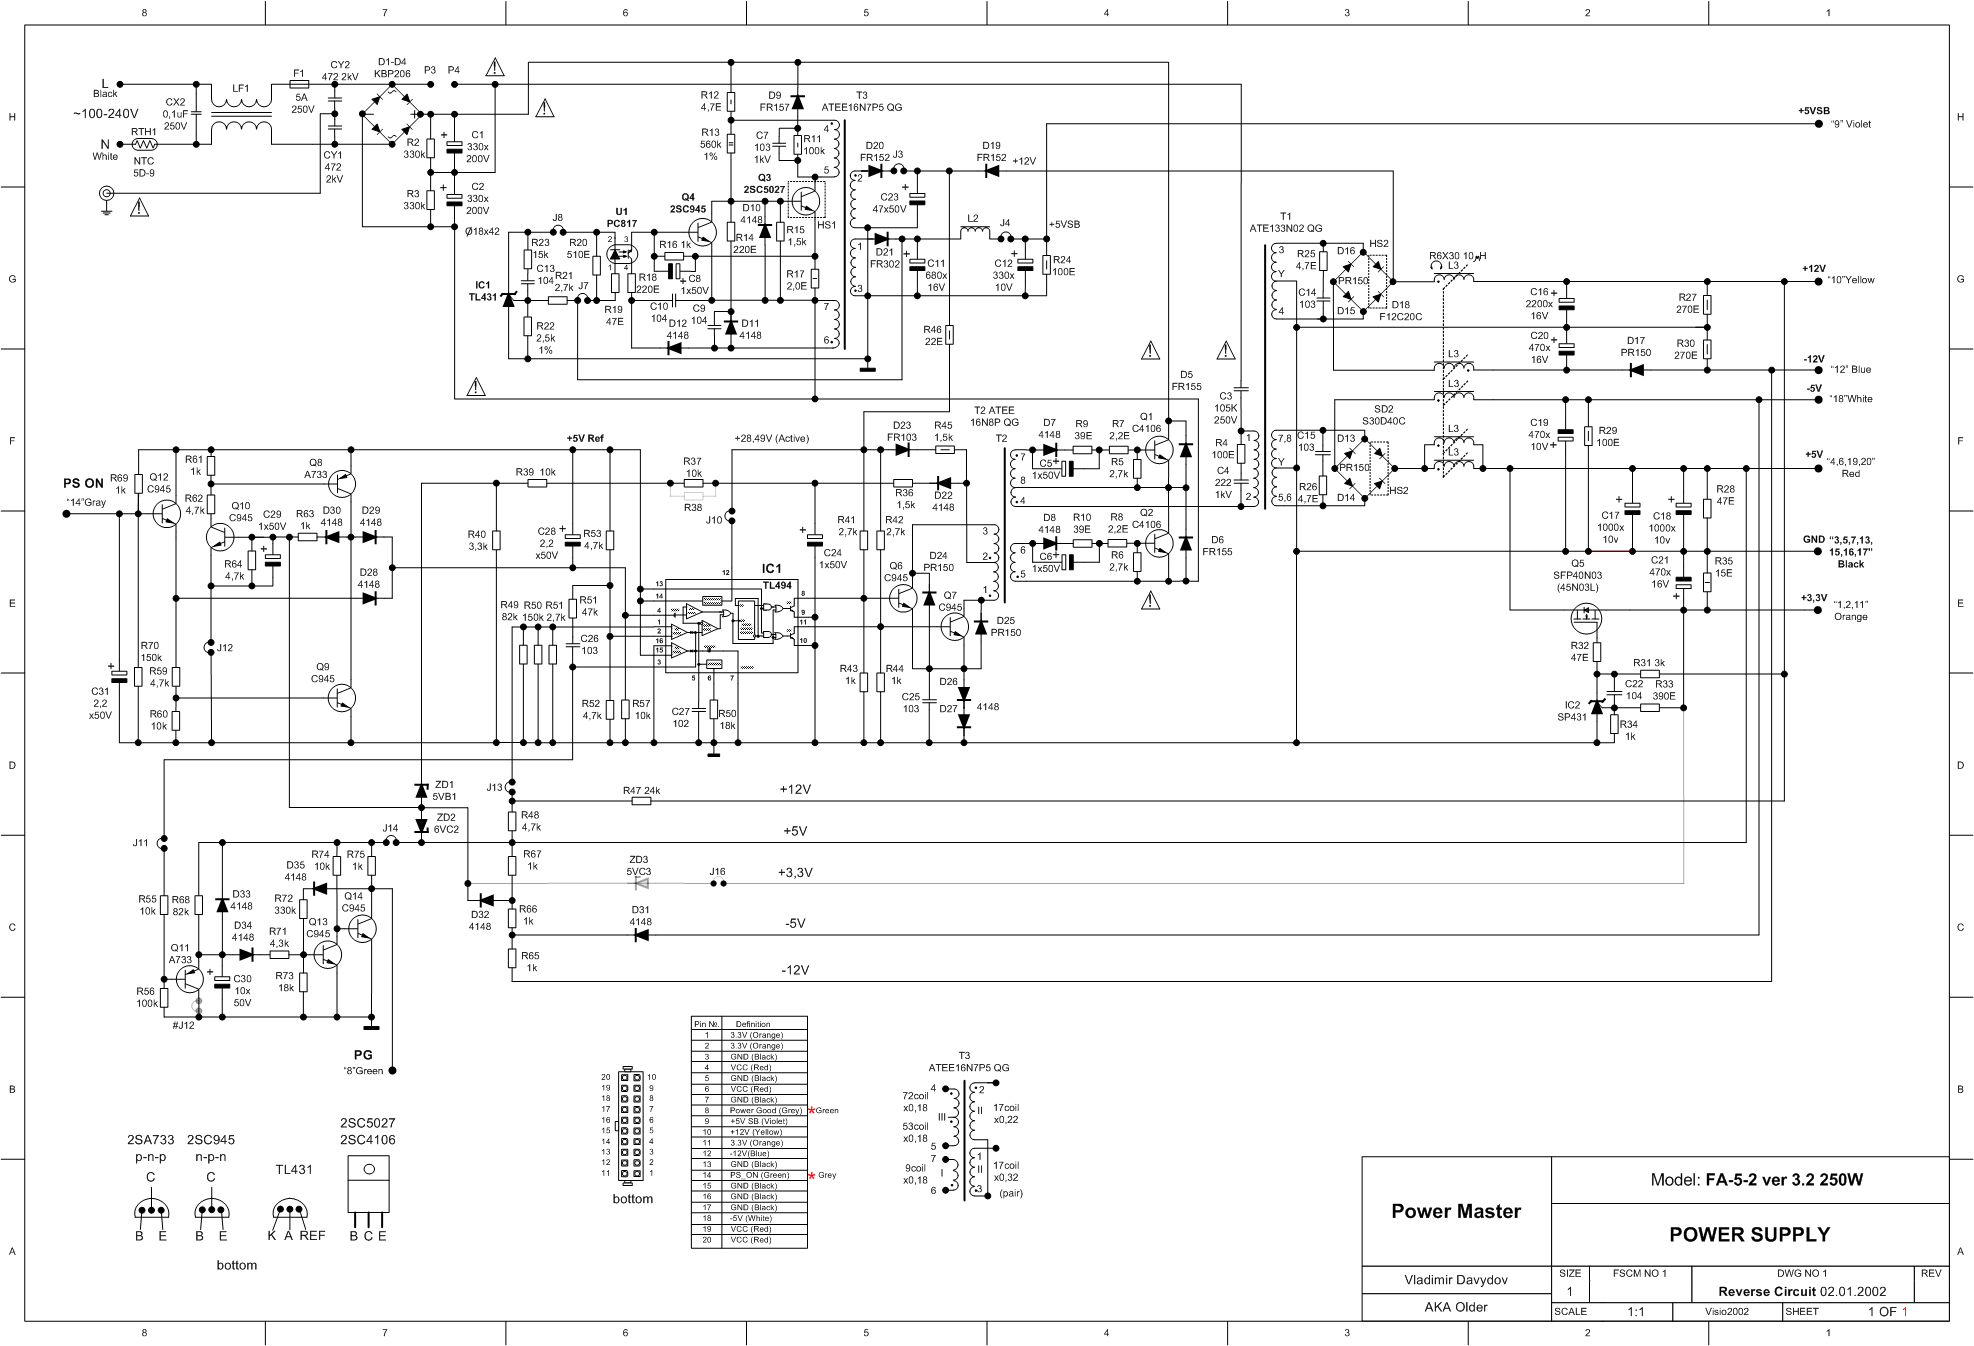 Блок питания Power Master 300 (fa-5-1/300w) схема